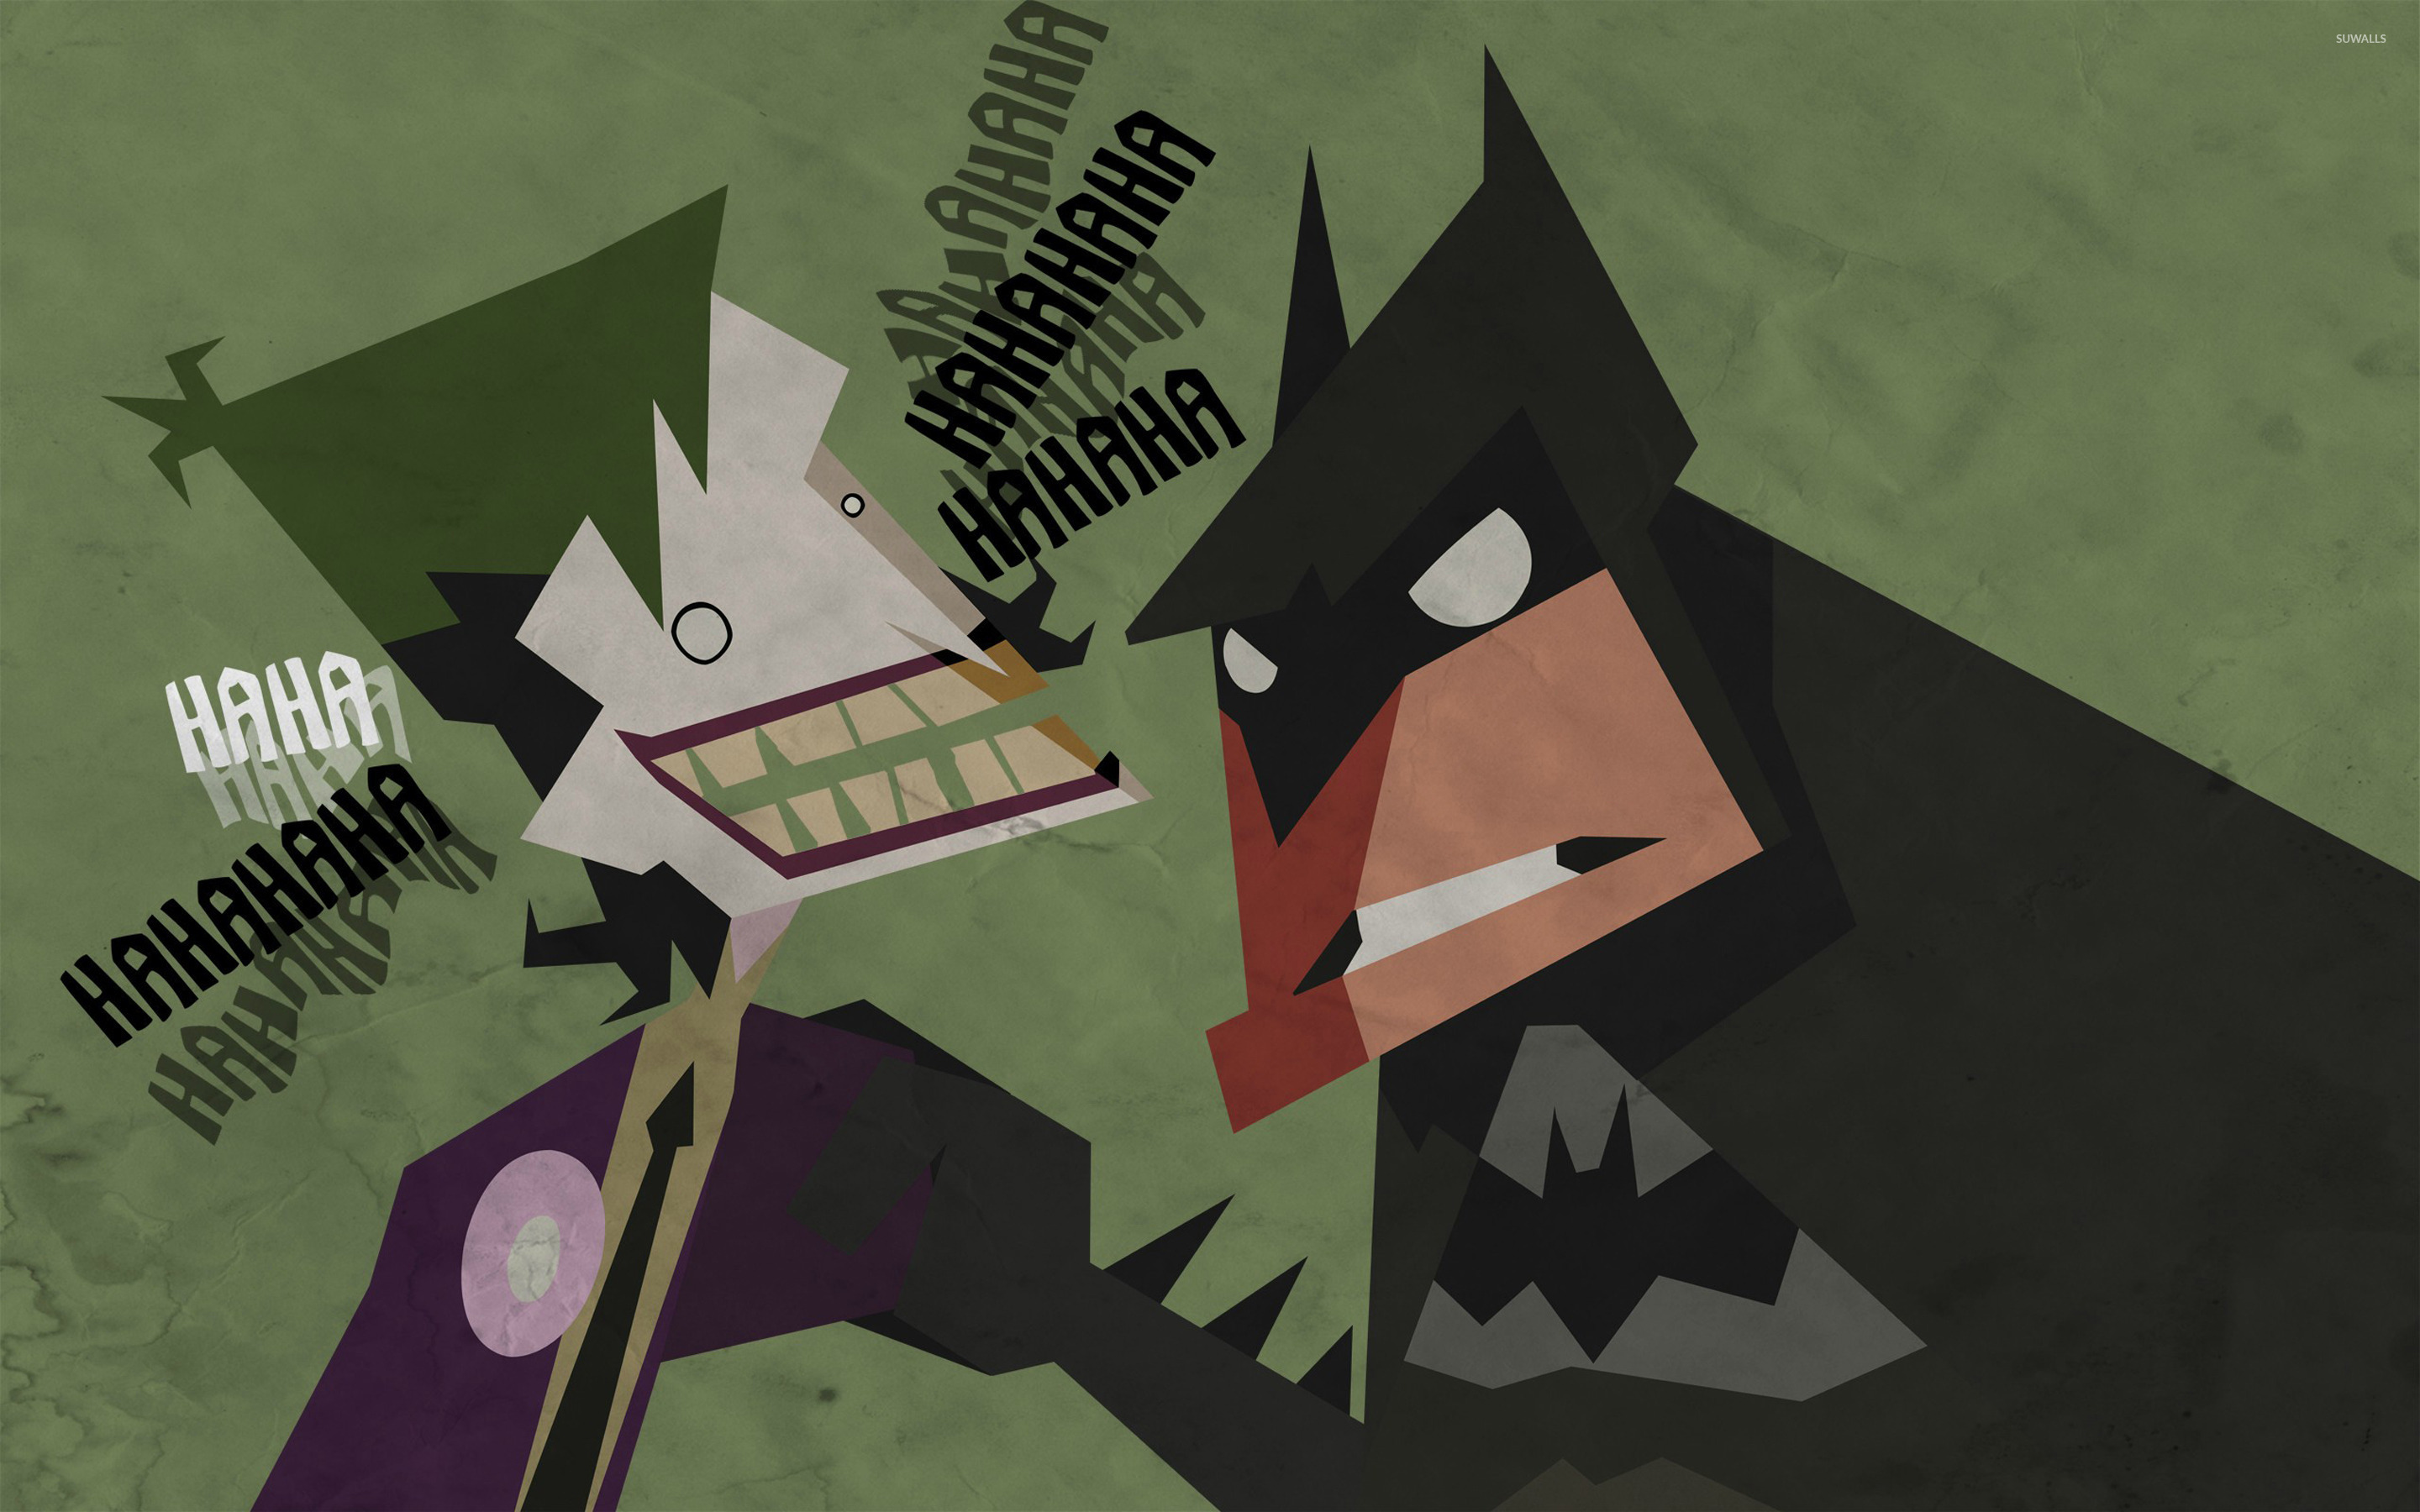 Joker and Batman DC Comic Wallpaper, HD Superheroes 4K Wallpapers, Images  and Background - Wallpapers Den